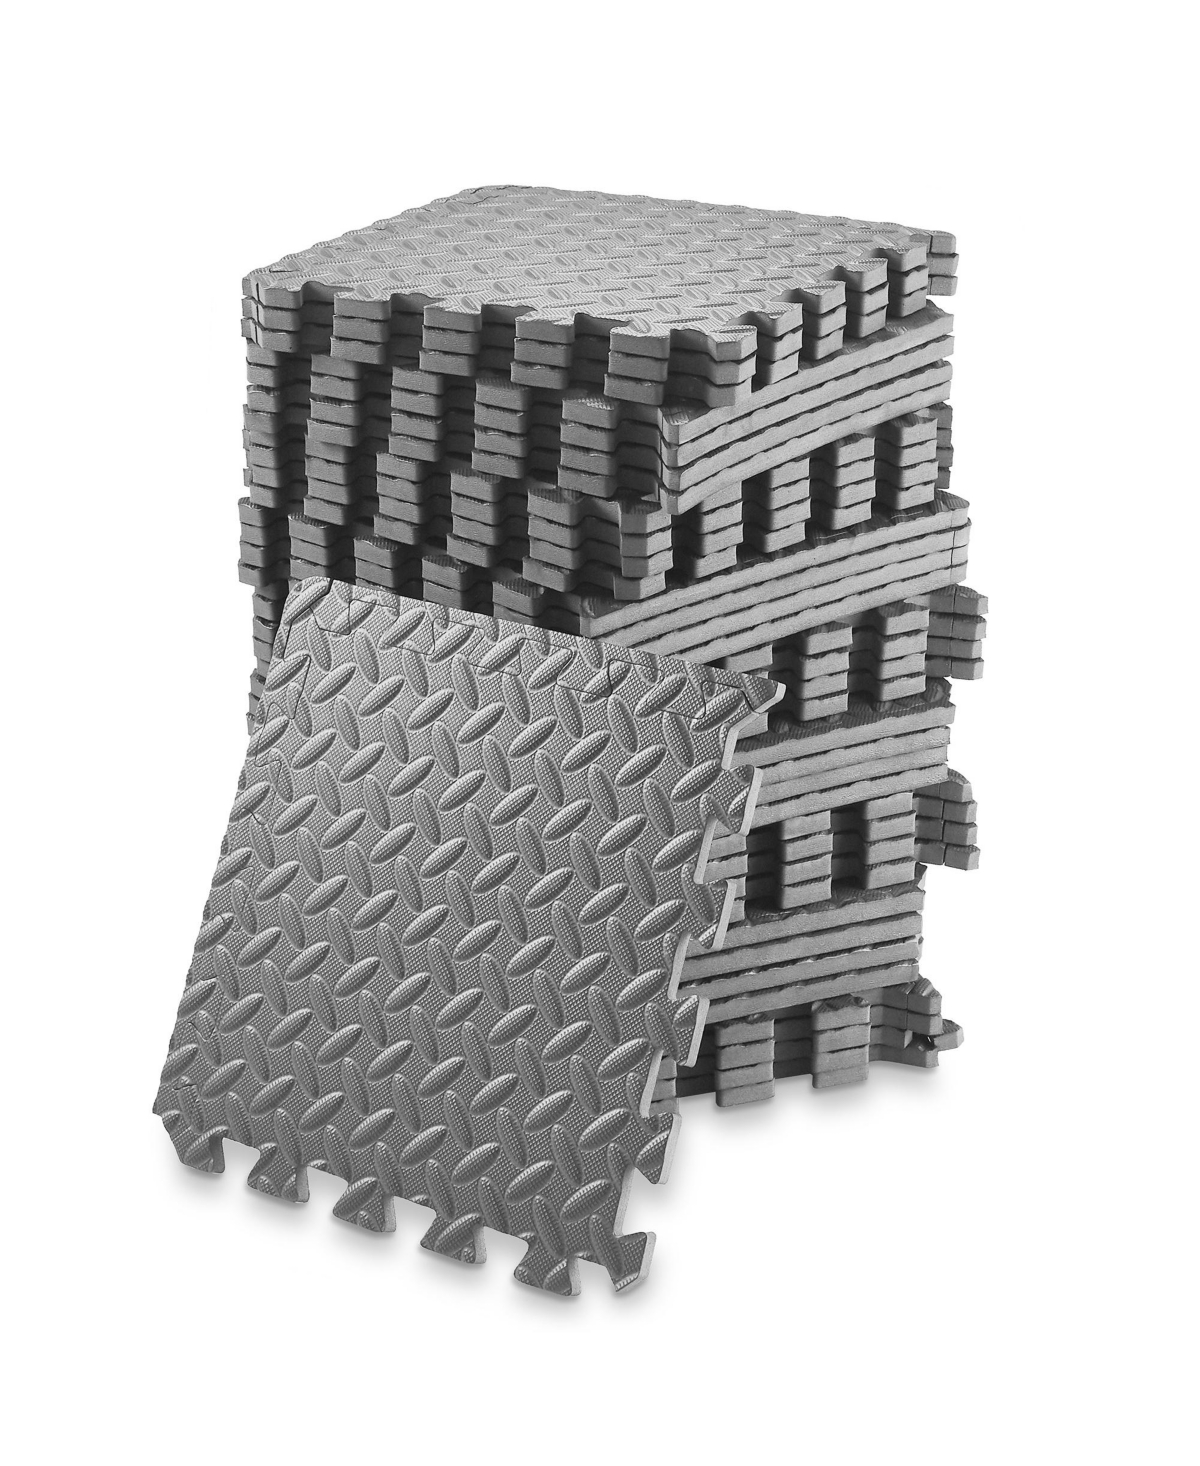 Pack of 36 Exercise Flooring Mats - 12 x 12 Inch Foam Rubber Interlocking Puzzle Floor Tiles - Gray - Grey